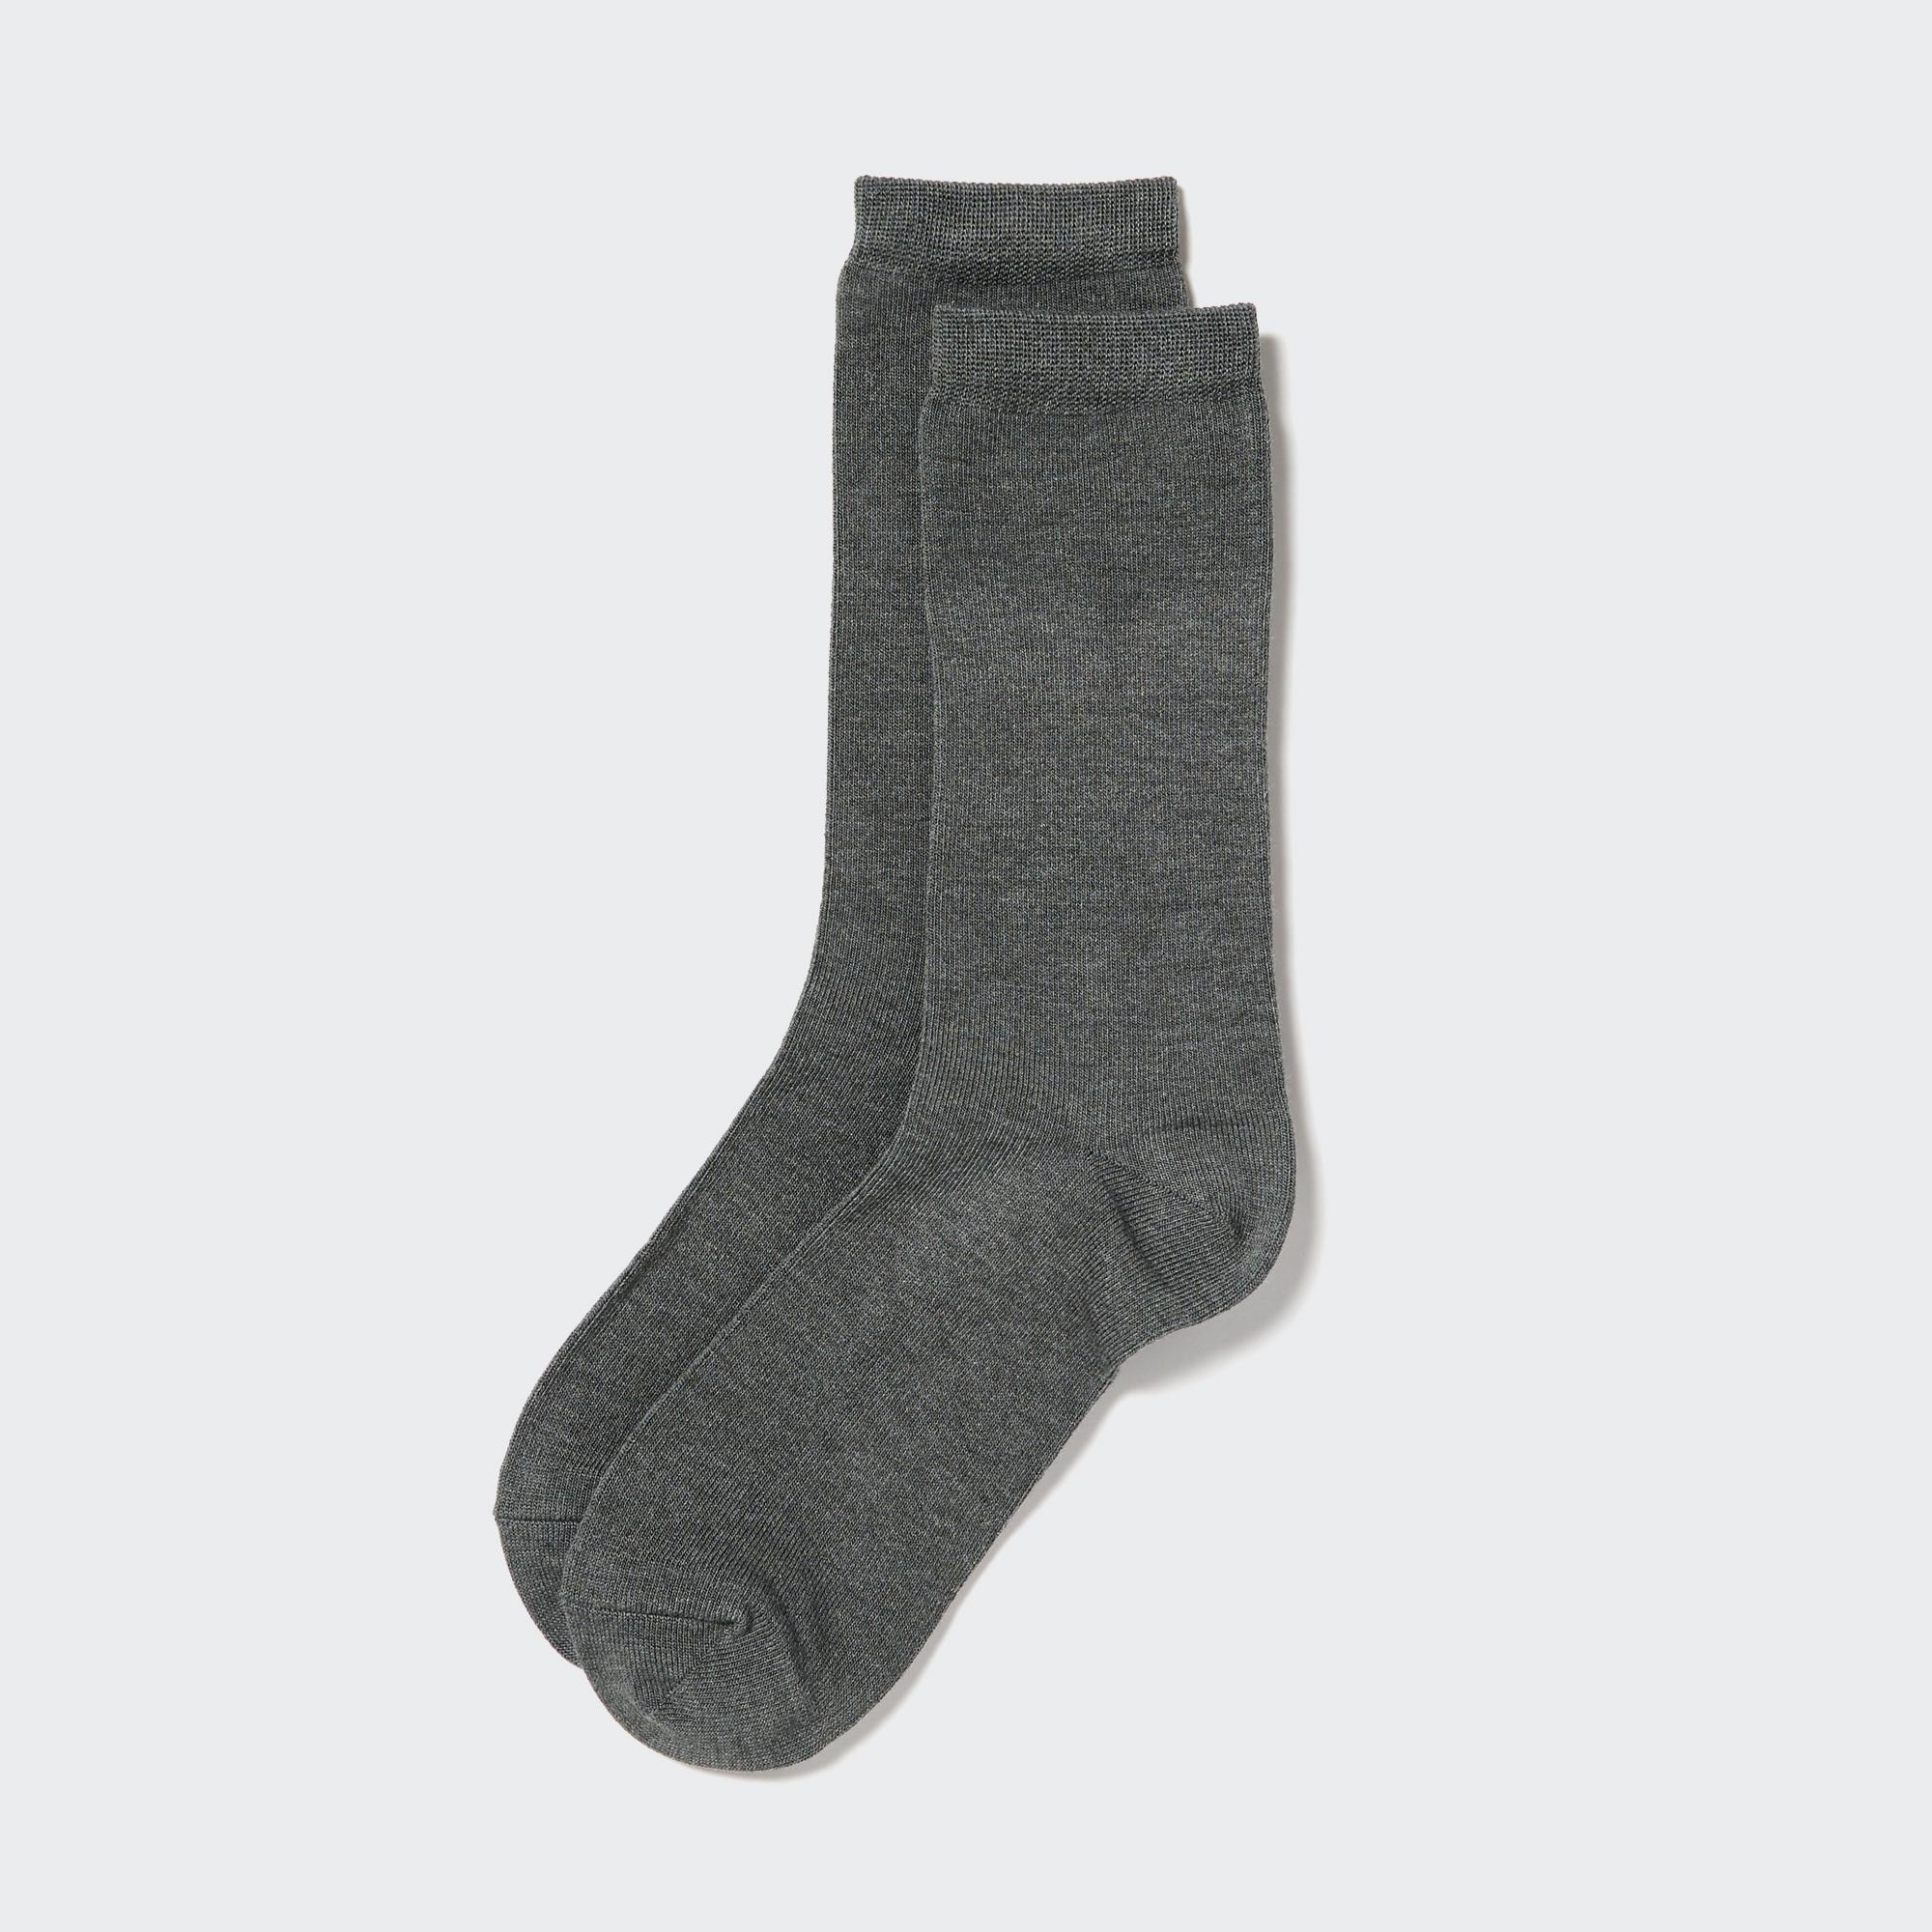 Purchase Wholesale barefoot dreams socks. Free Returns & Net 60